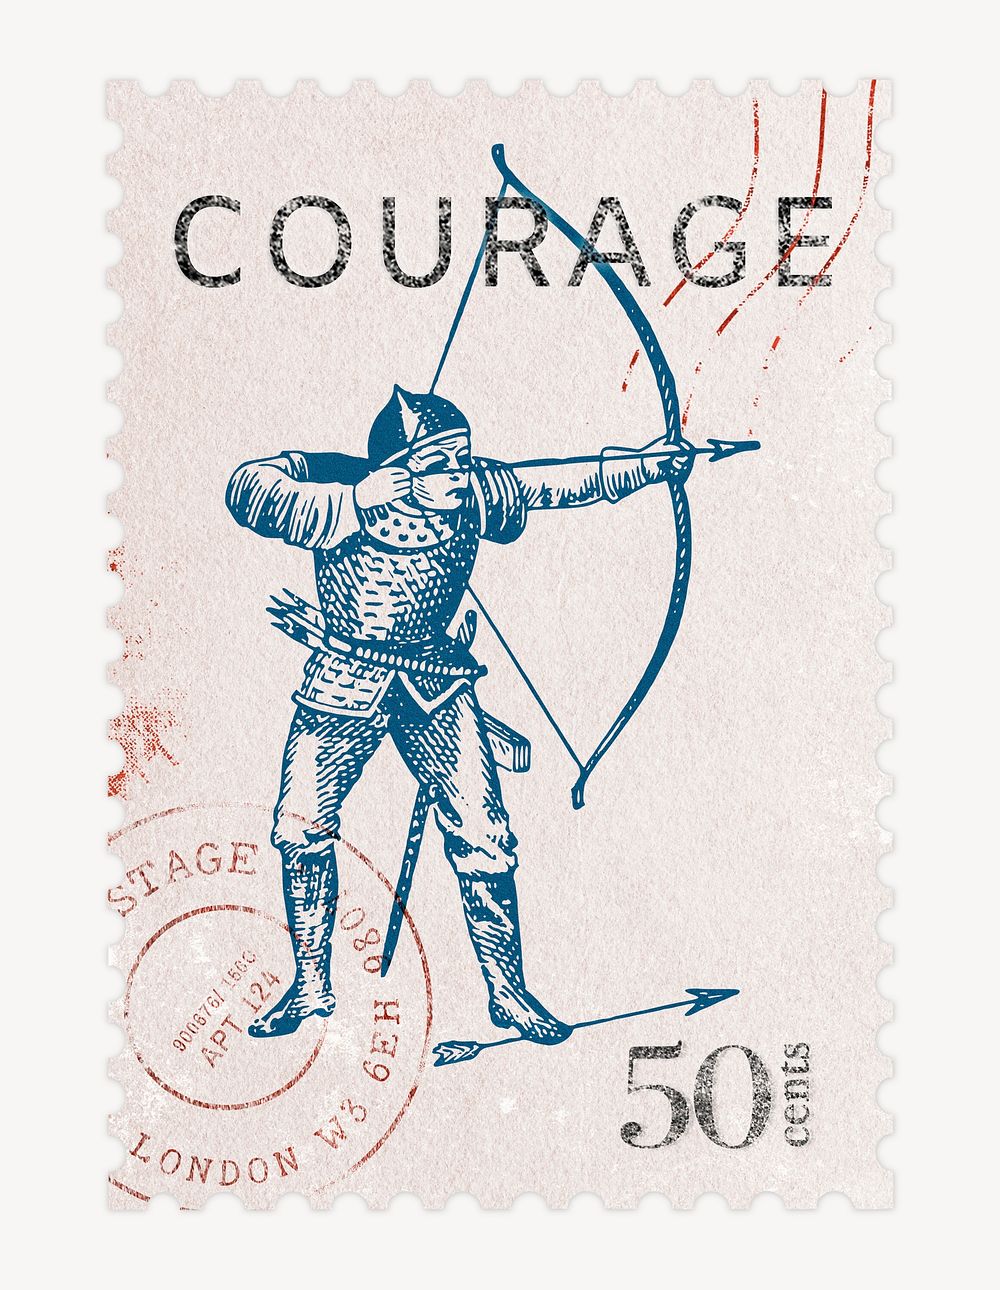 Courage postage stamp, vintage stationery collage element